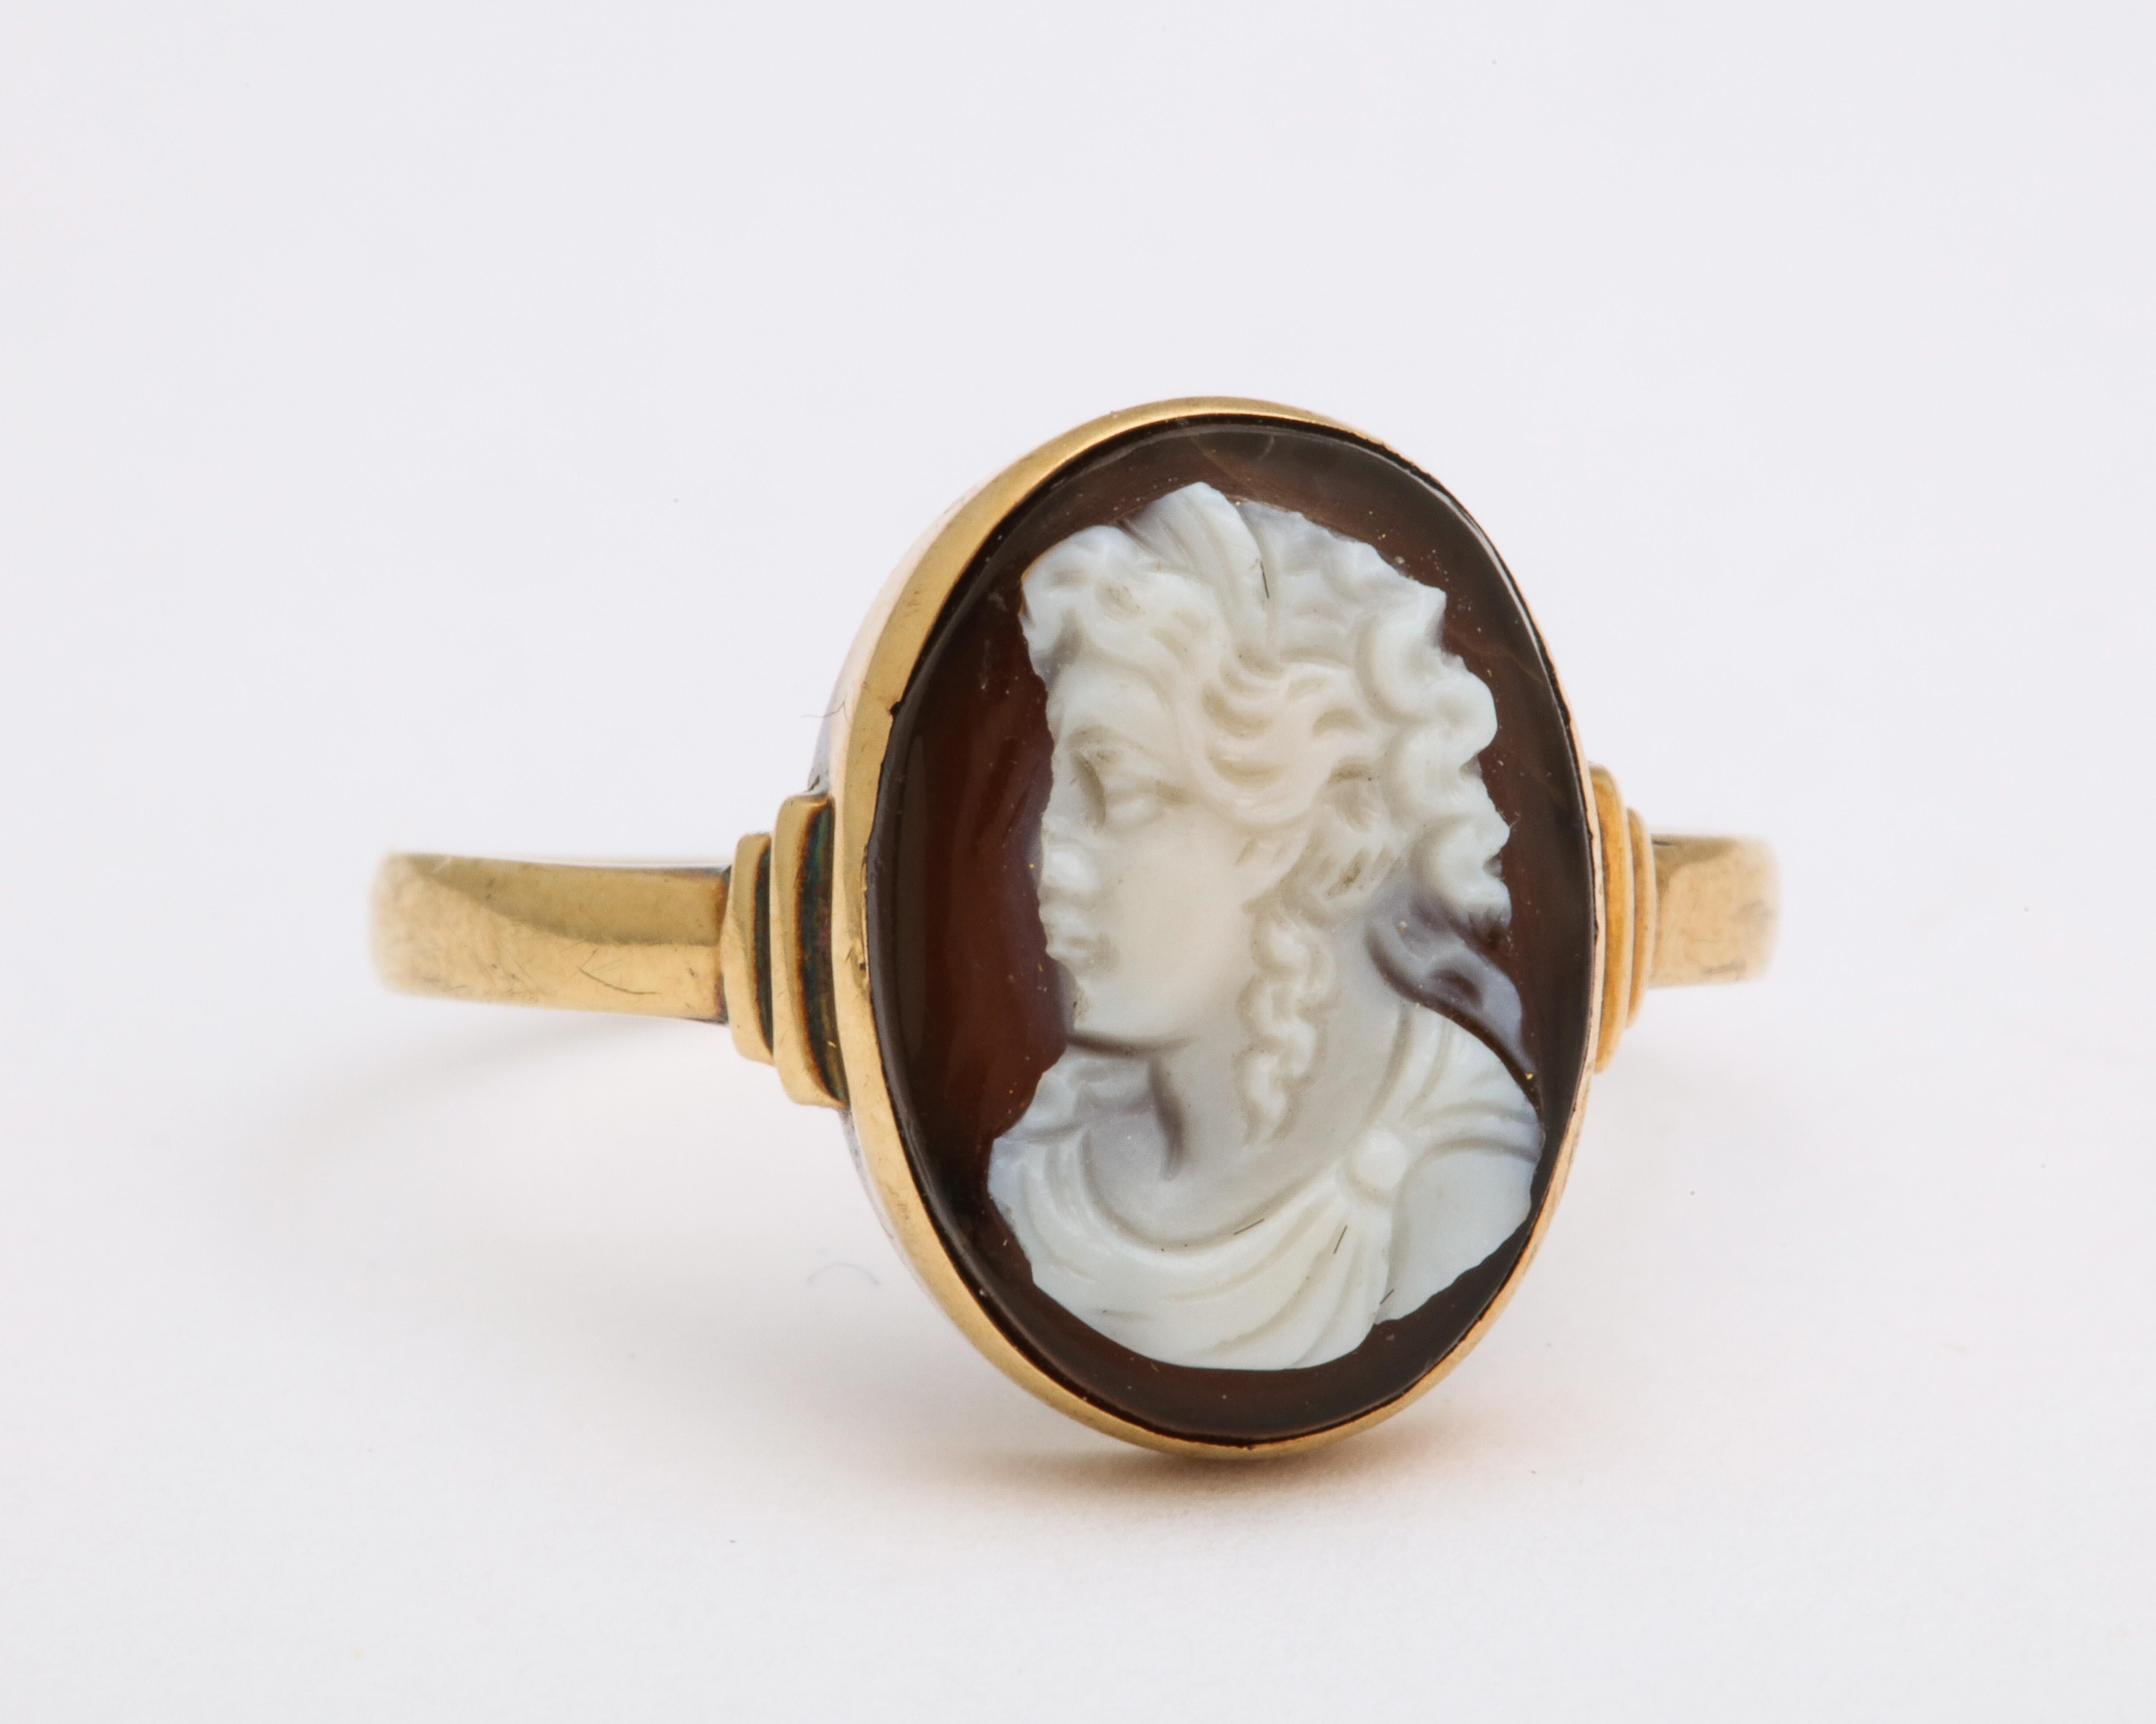 Cabochon Gold Agate Cameo Ring, circa 1850